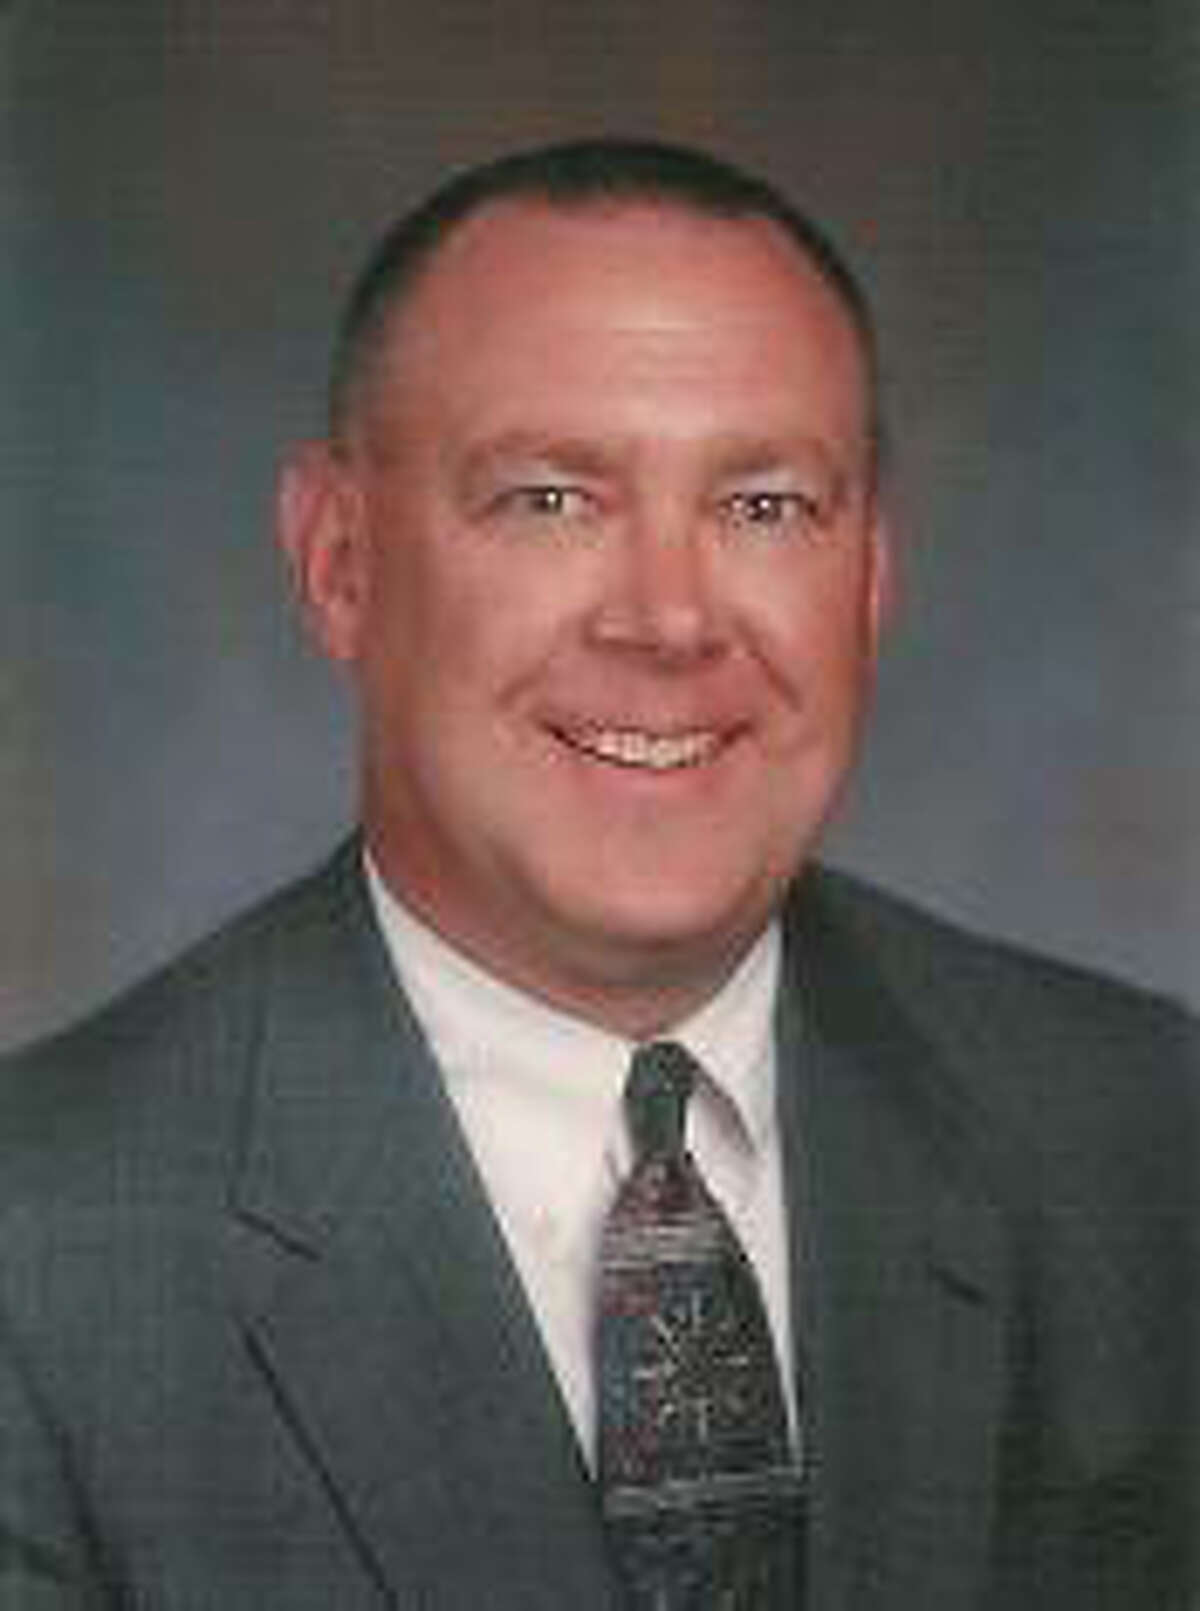 Superintendent Scott Crosby